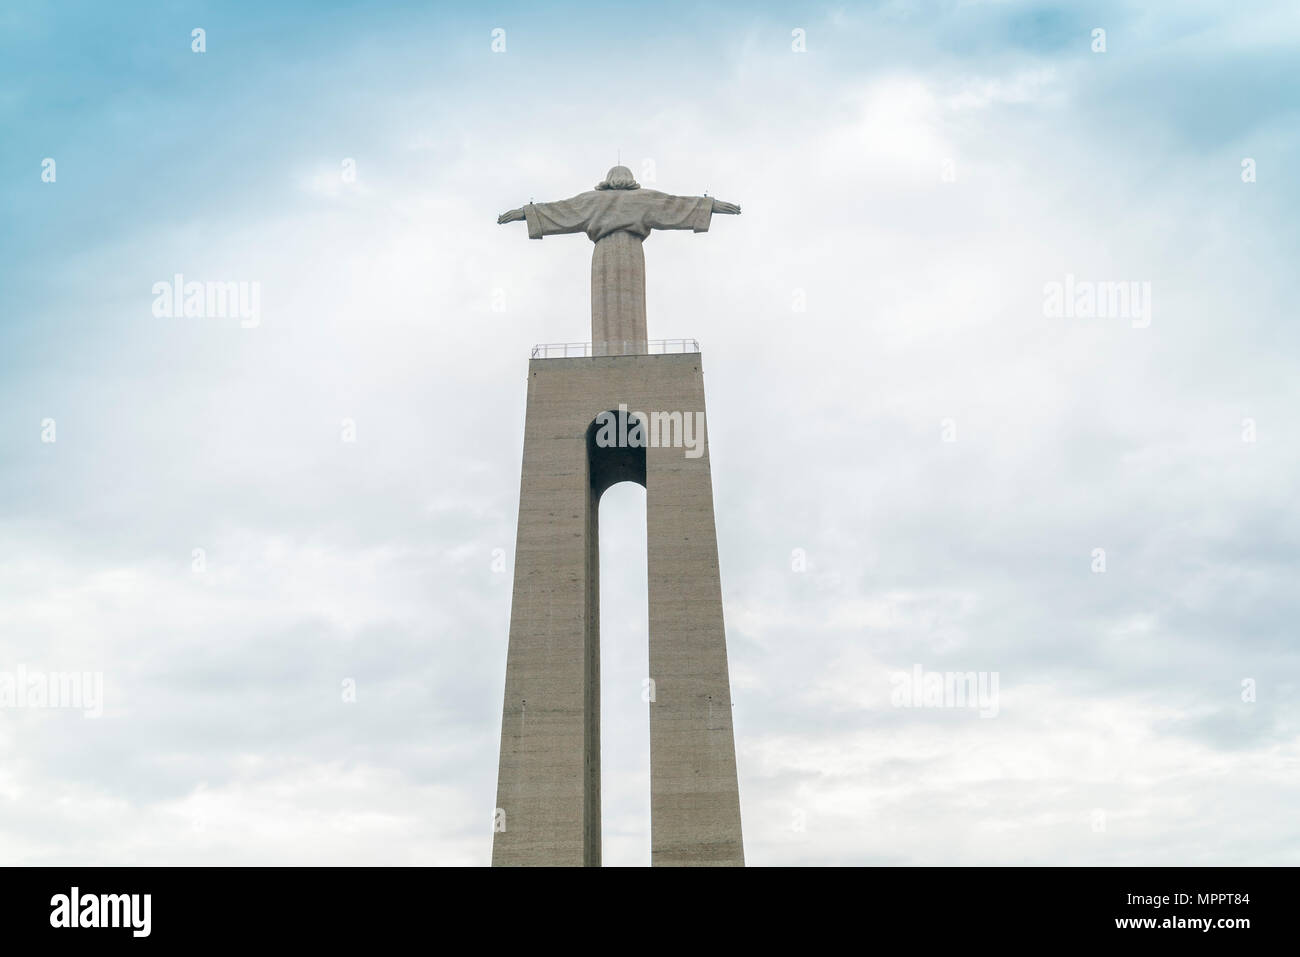 Portugal, Lisbon, Almada, Cristo-Rei, view of statue and catholic monument of Jesus Christ Stock Photo